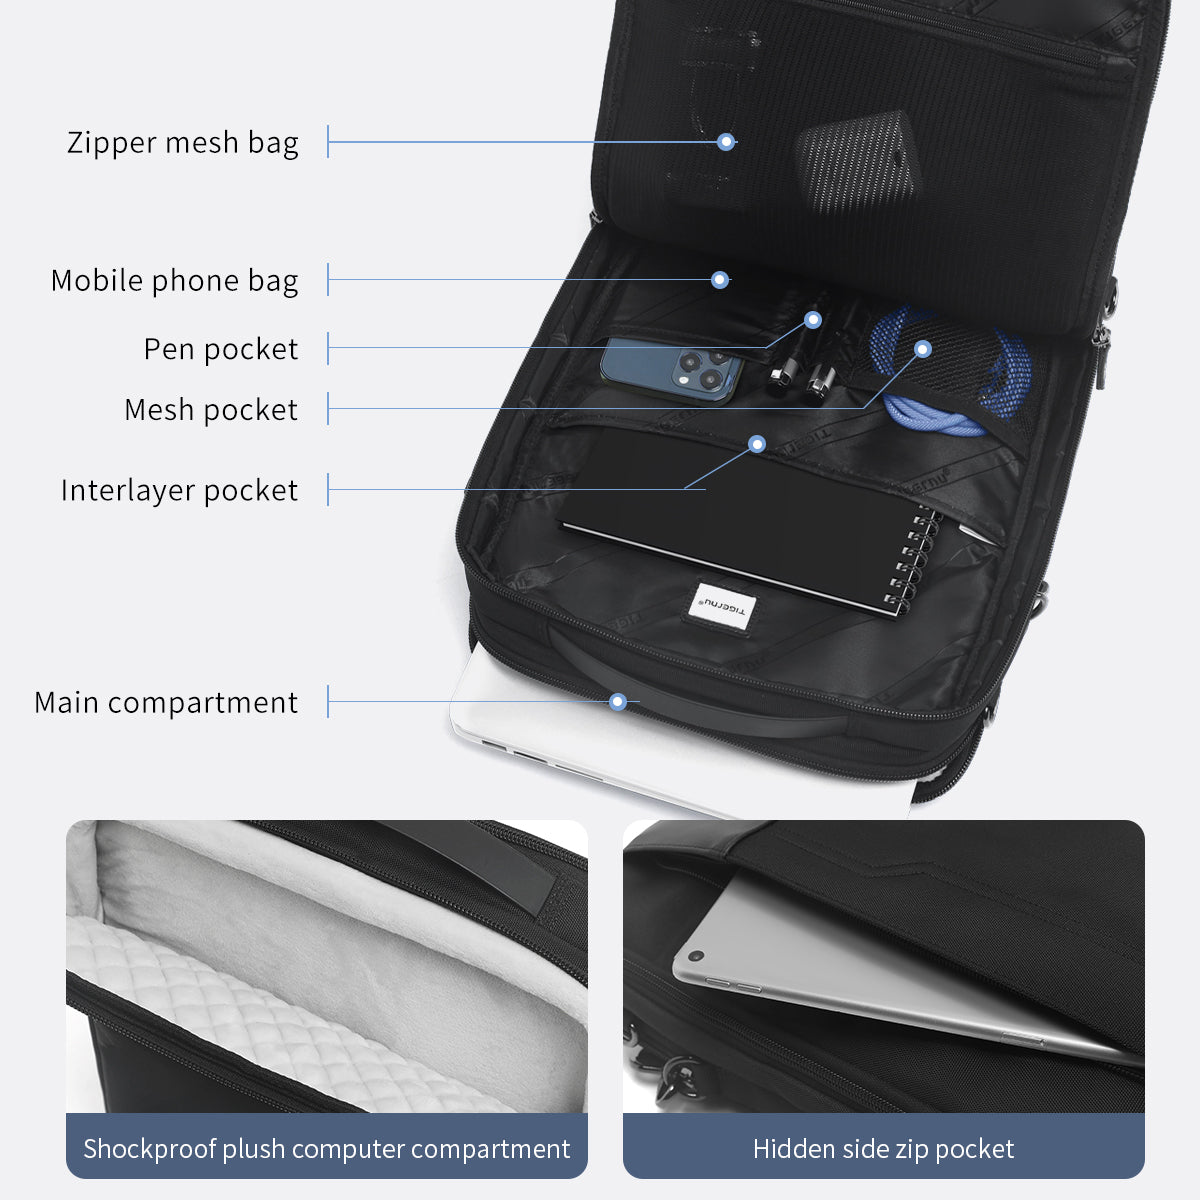 Tigernu Crossbody 12.9" iPad Pro Messenger Bag